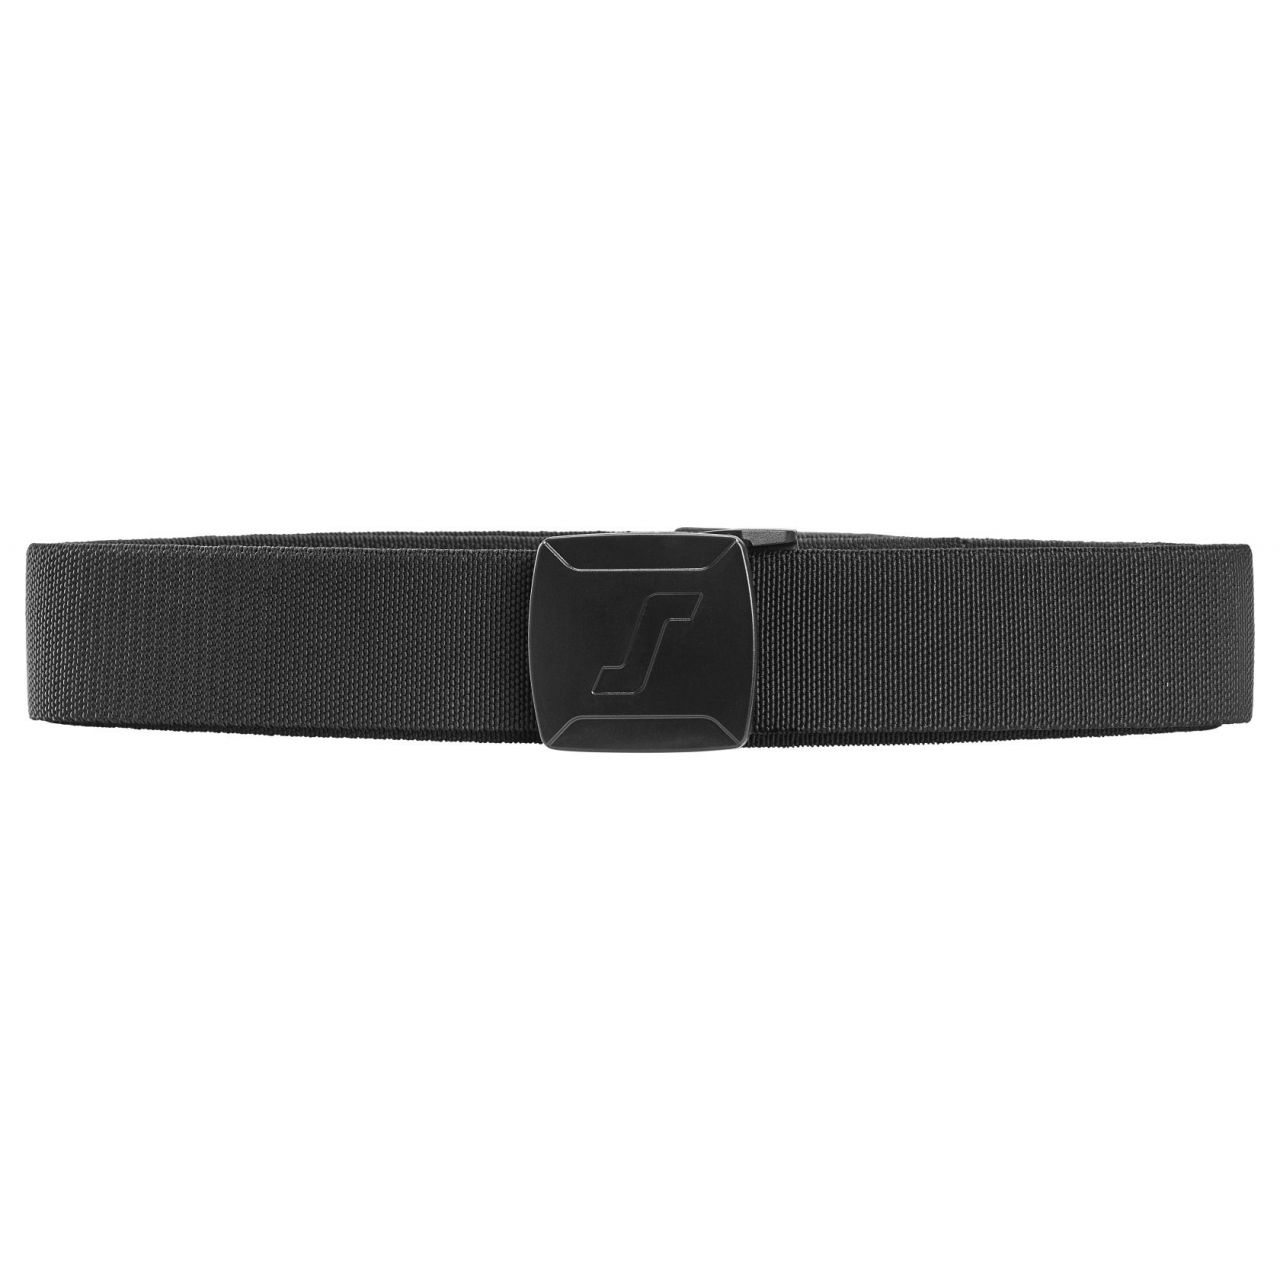 Cinturon elastico negro talla unica